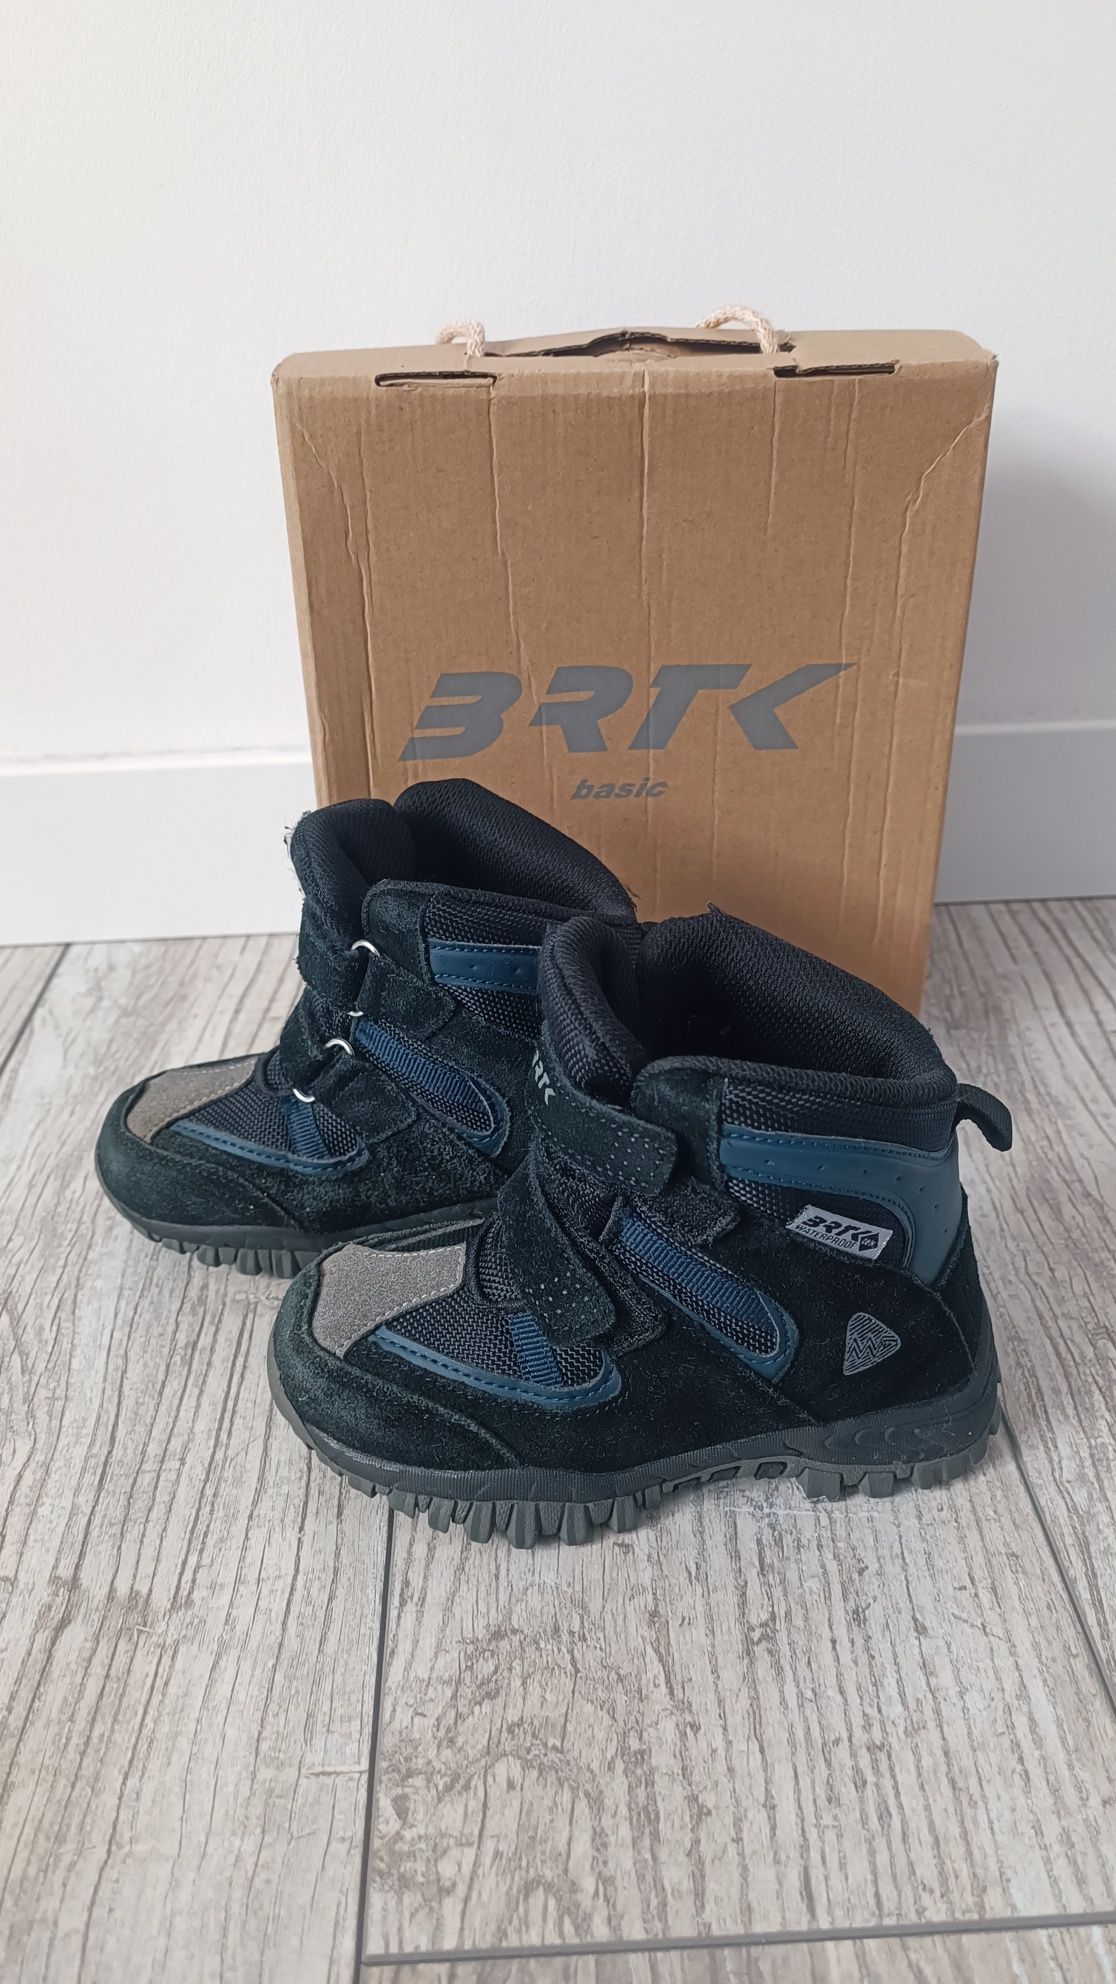 Buty zimowe Bartek BRTK (śniegowce TRP) r. 26